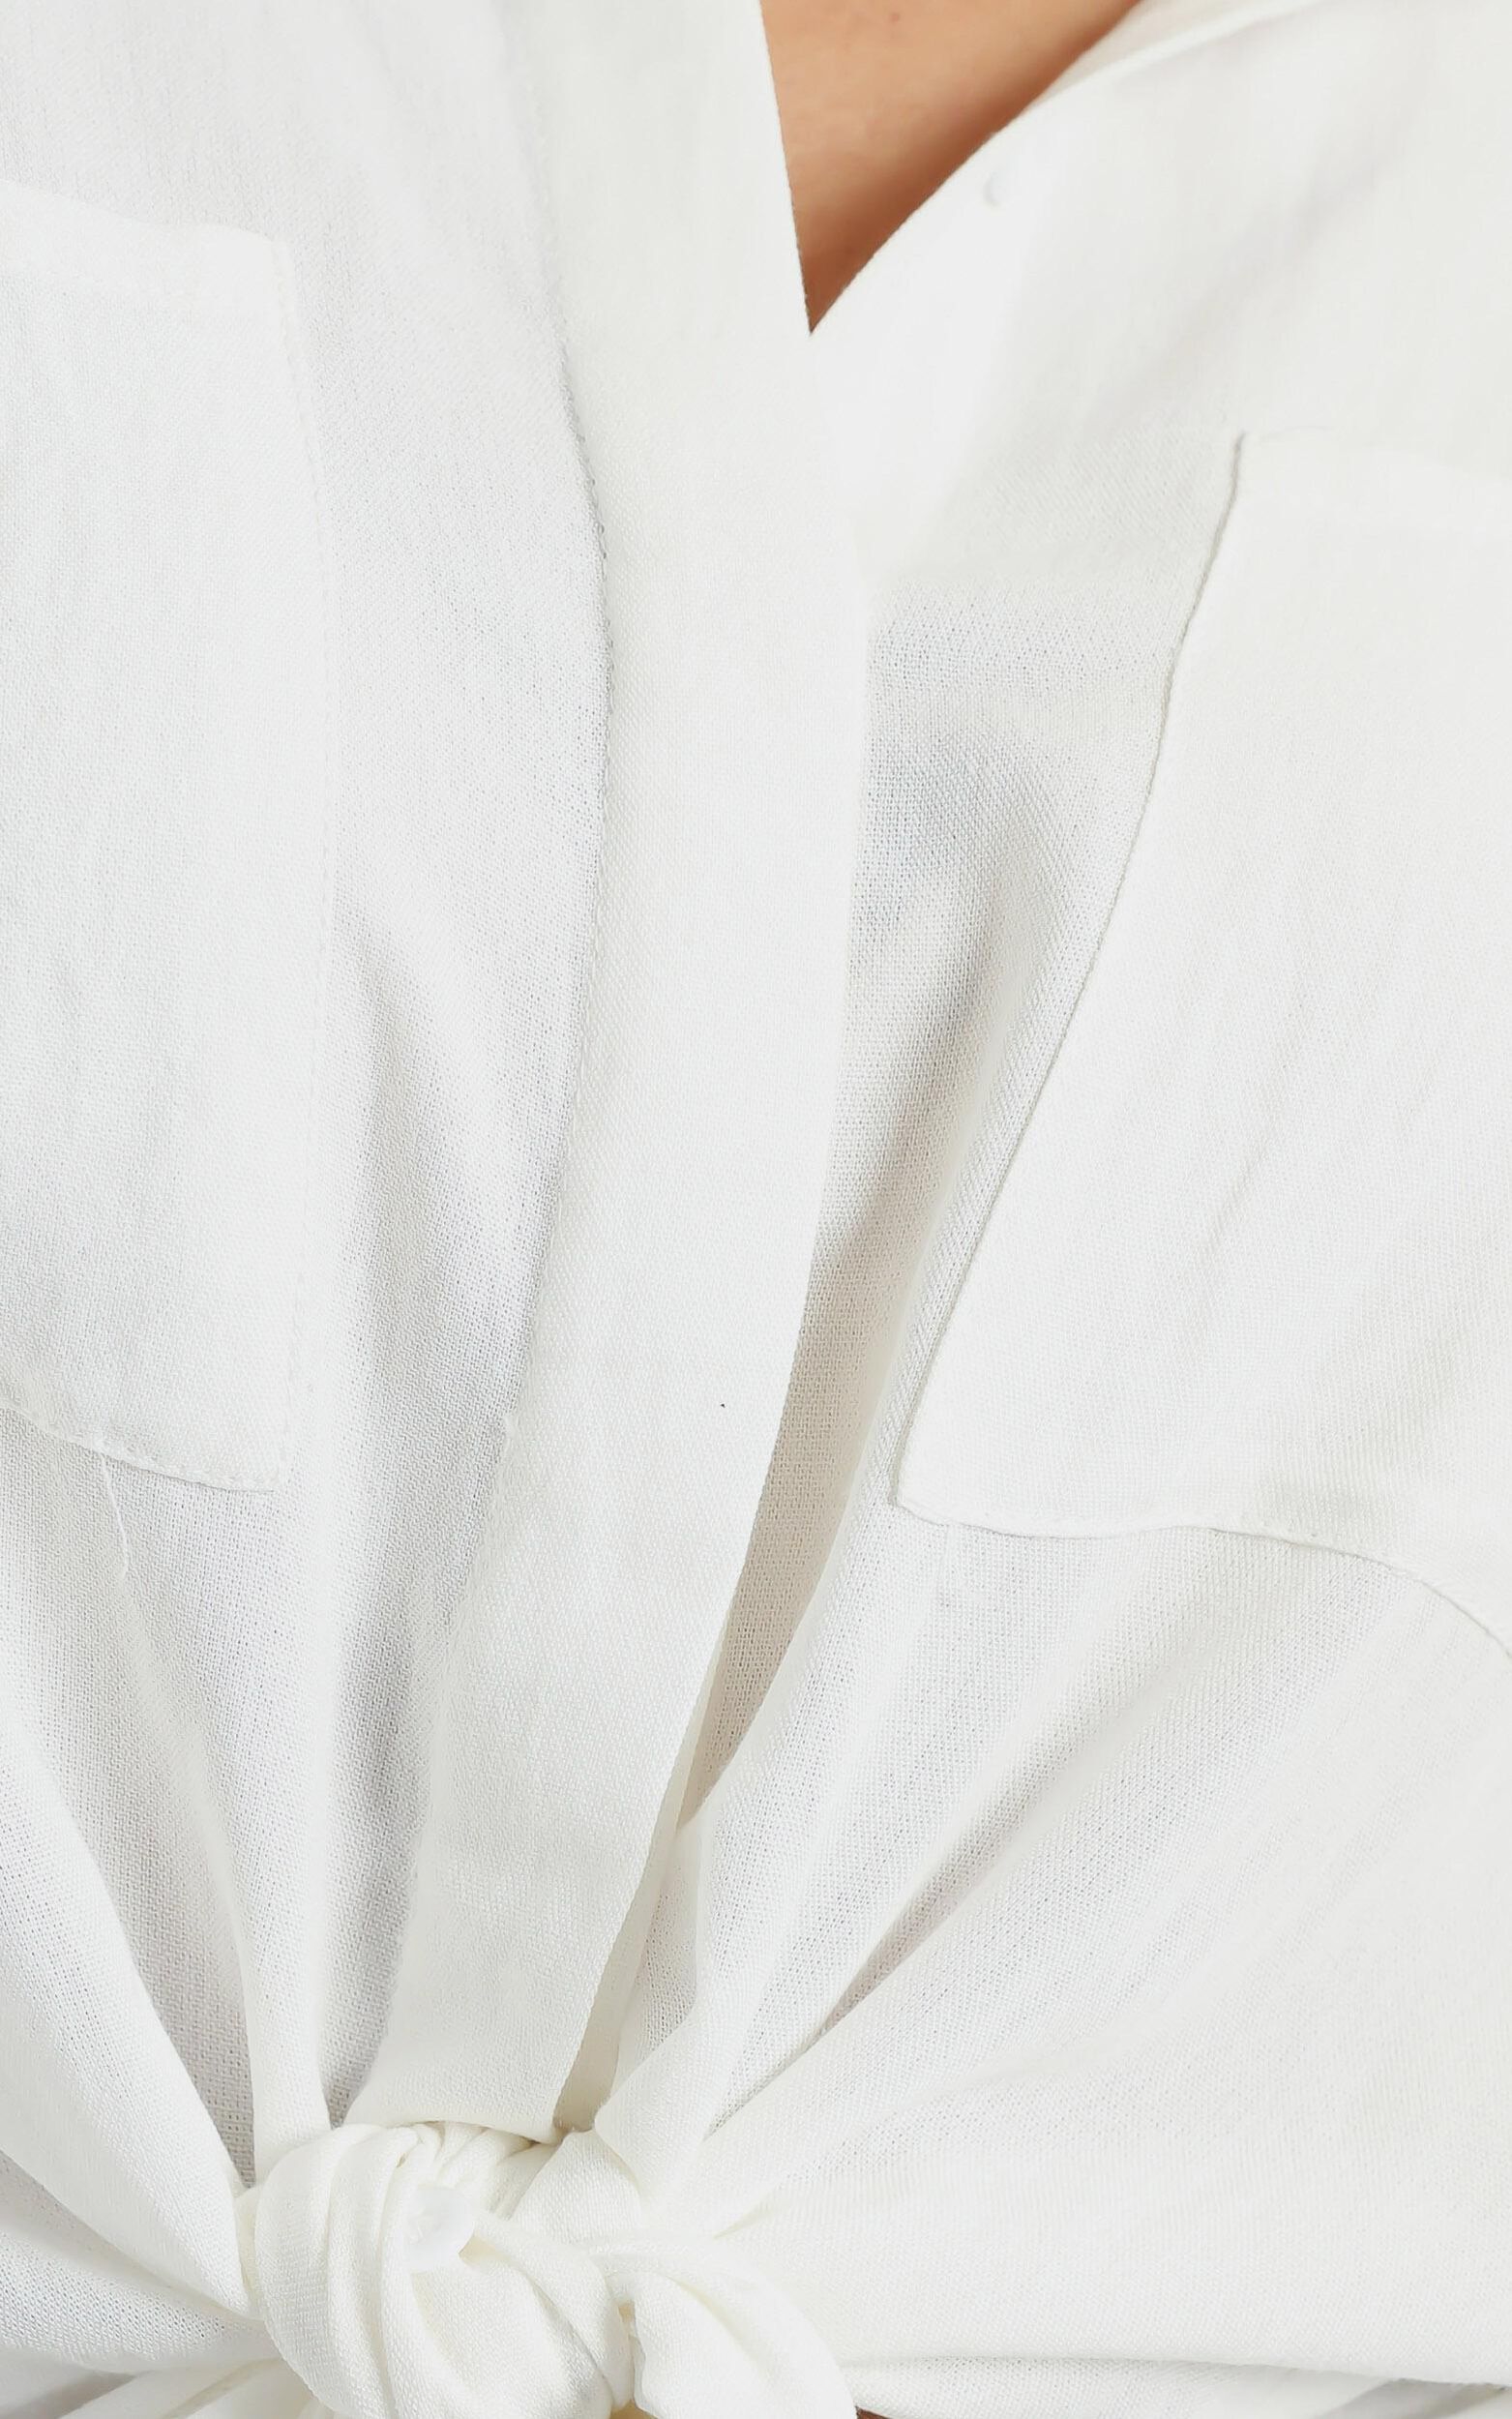 Trish Button Up Shirt in White | Showpo